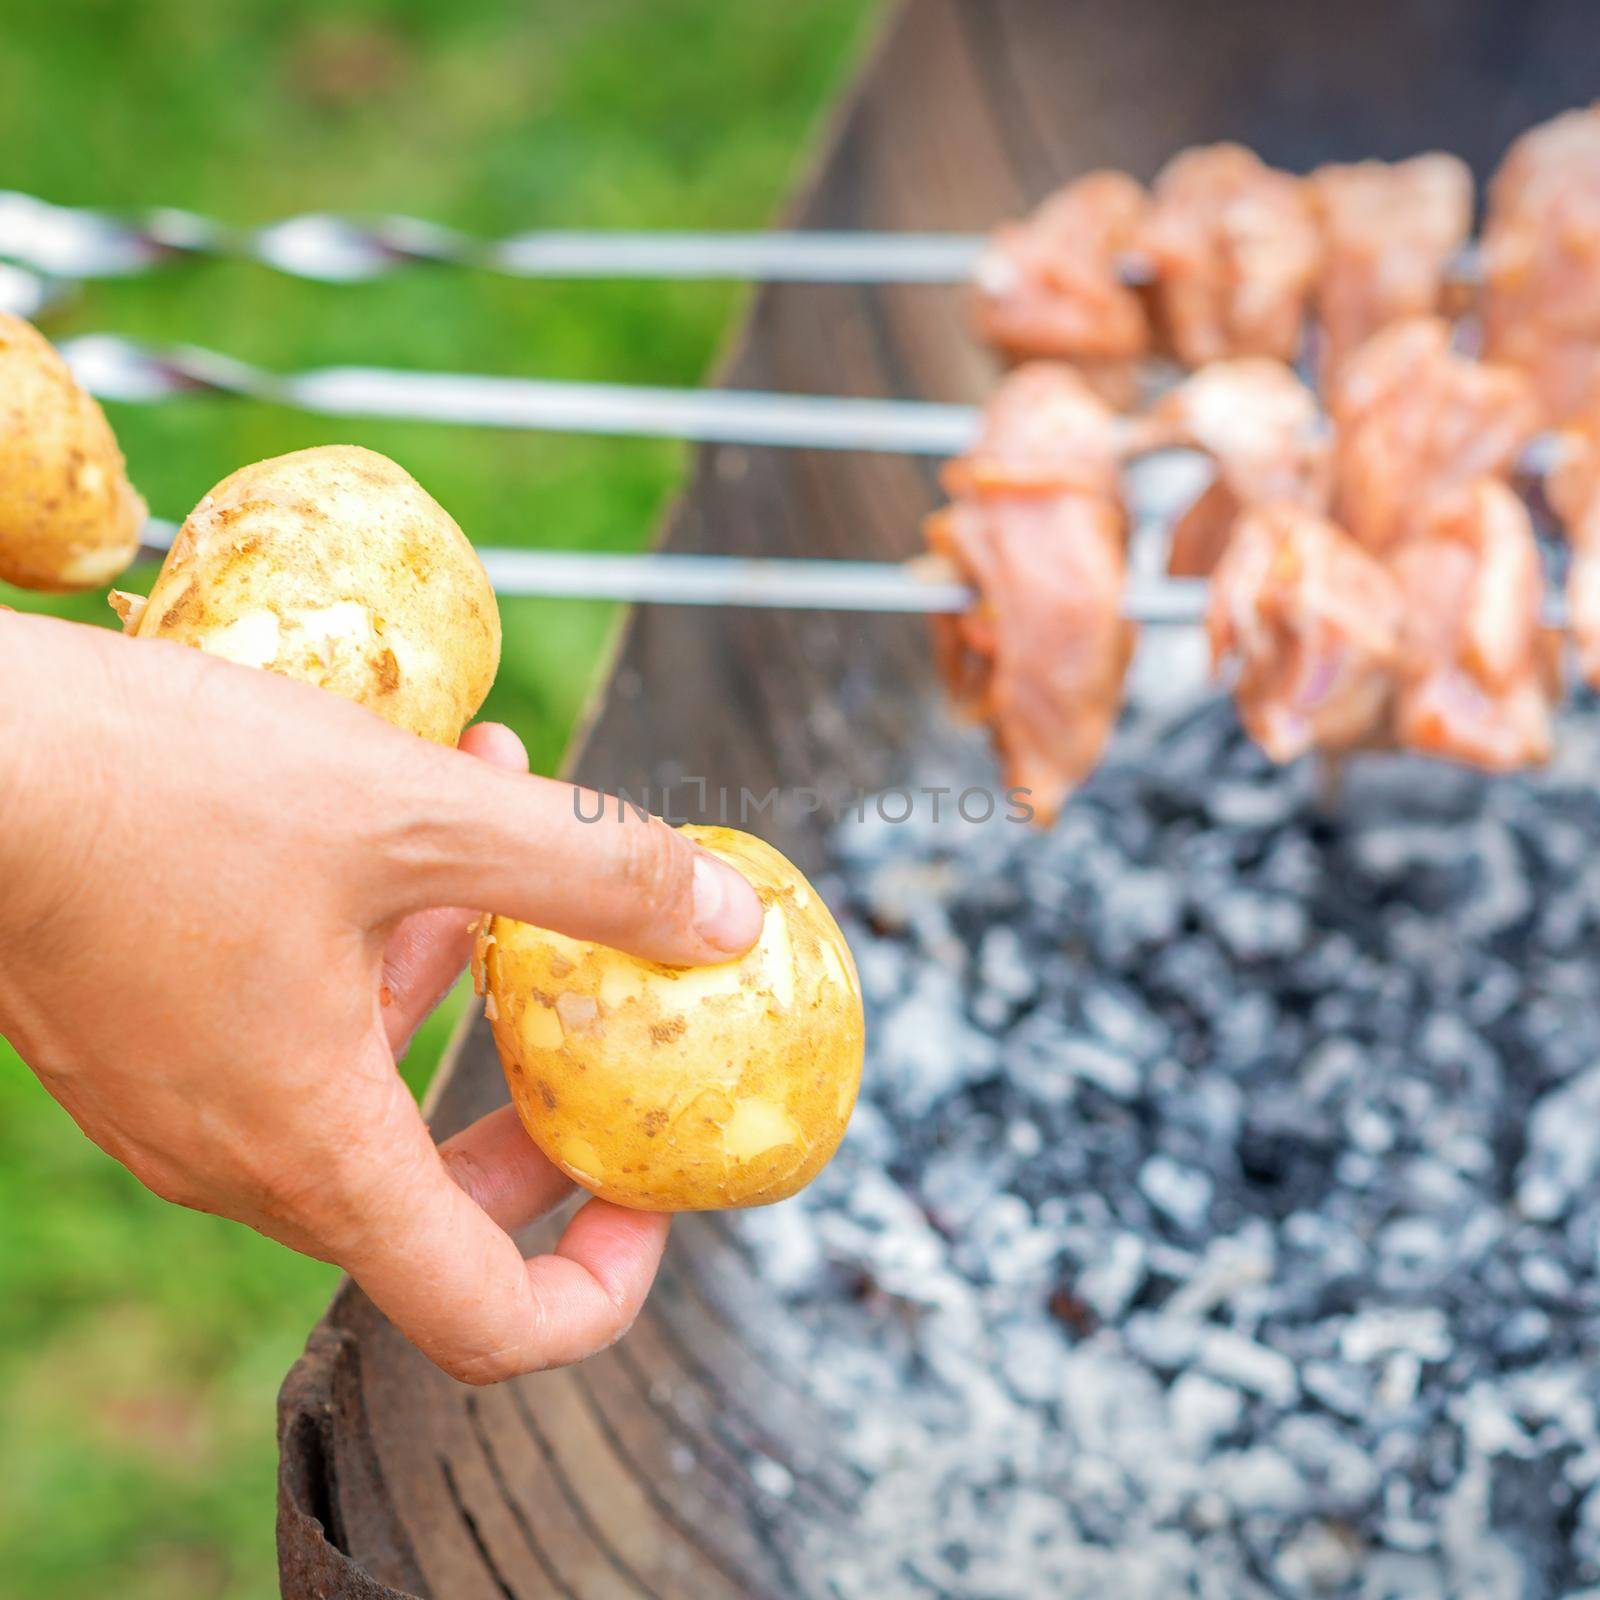 Man prepares barbecue meat with potatoes by okskukuruza